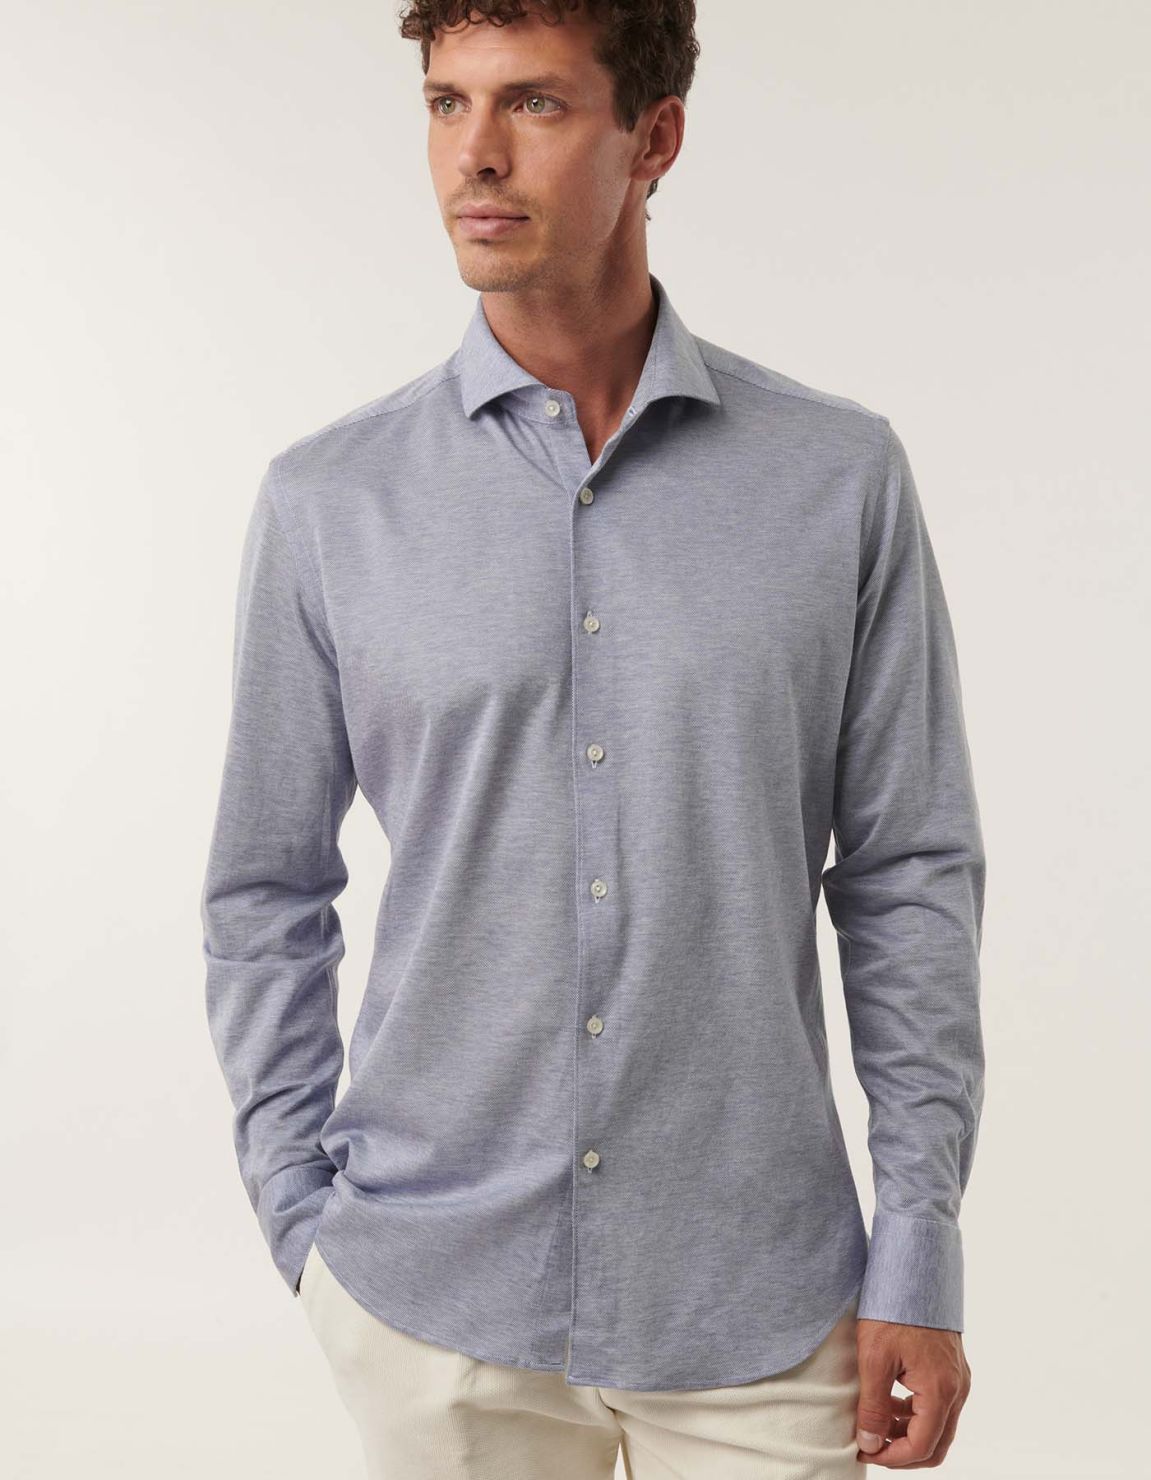 Light Blue Melange Jersey Solid colour Shirt Collar cutaway Tailor Custom Fit 1